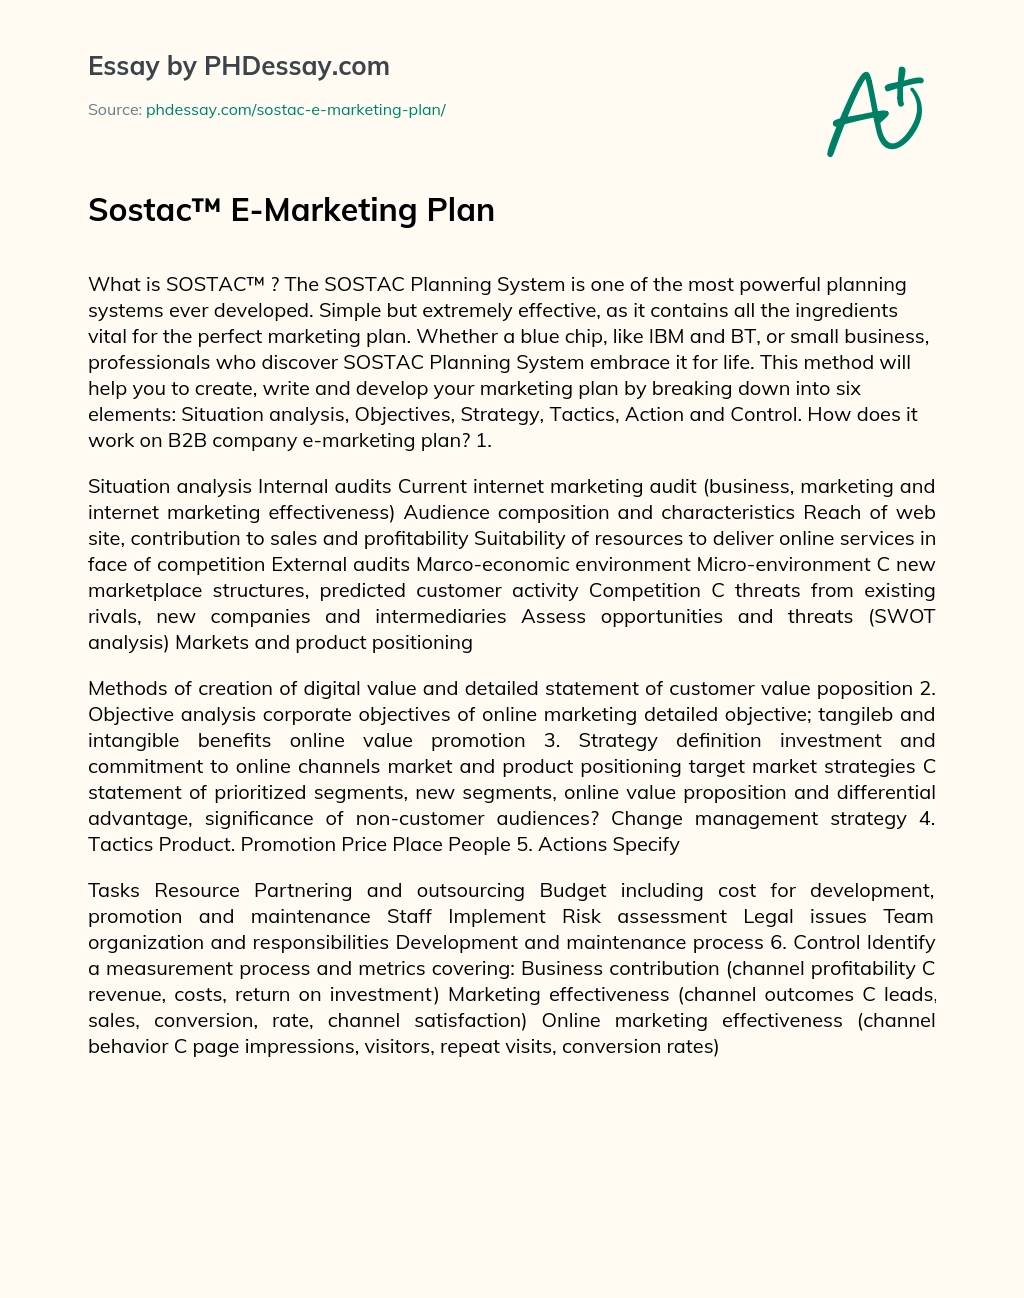 Sostac™ E-Marketing Plan essay